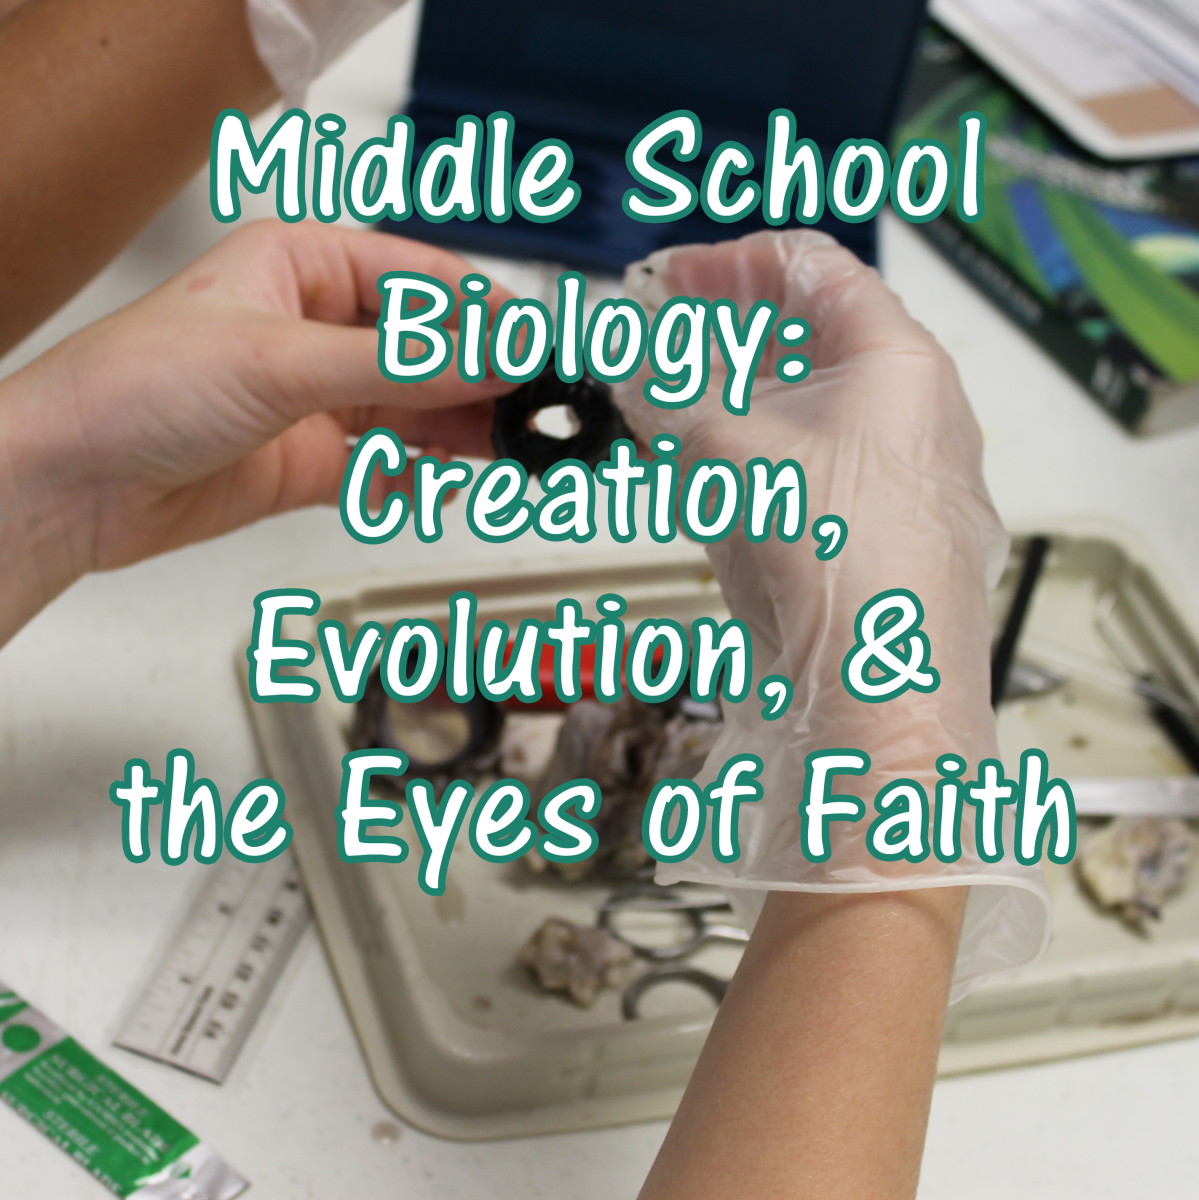 Creation, Evolution, & the Eyes of Faith STEM Lesson Plan